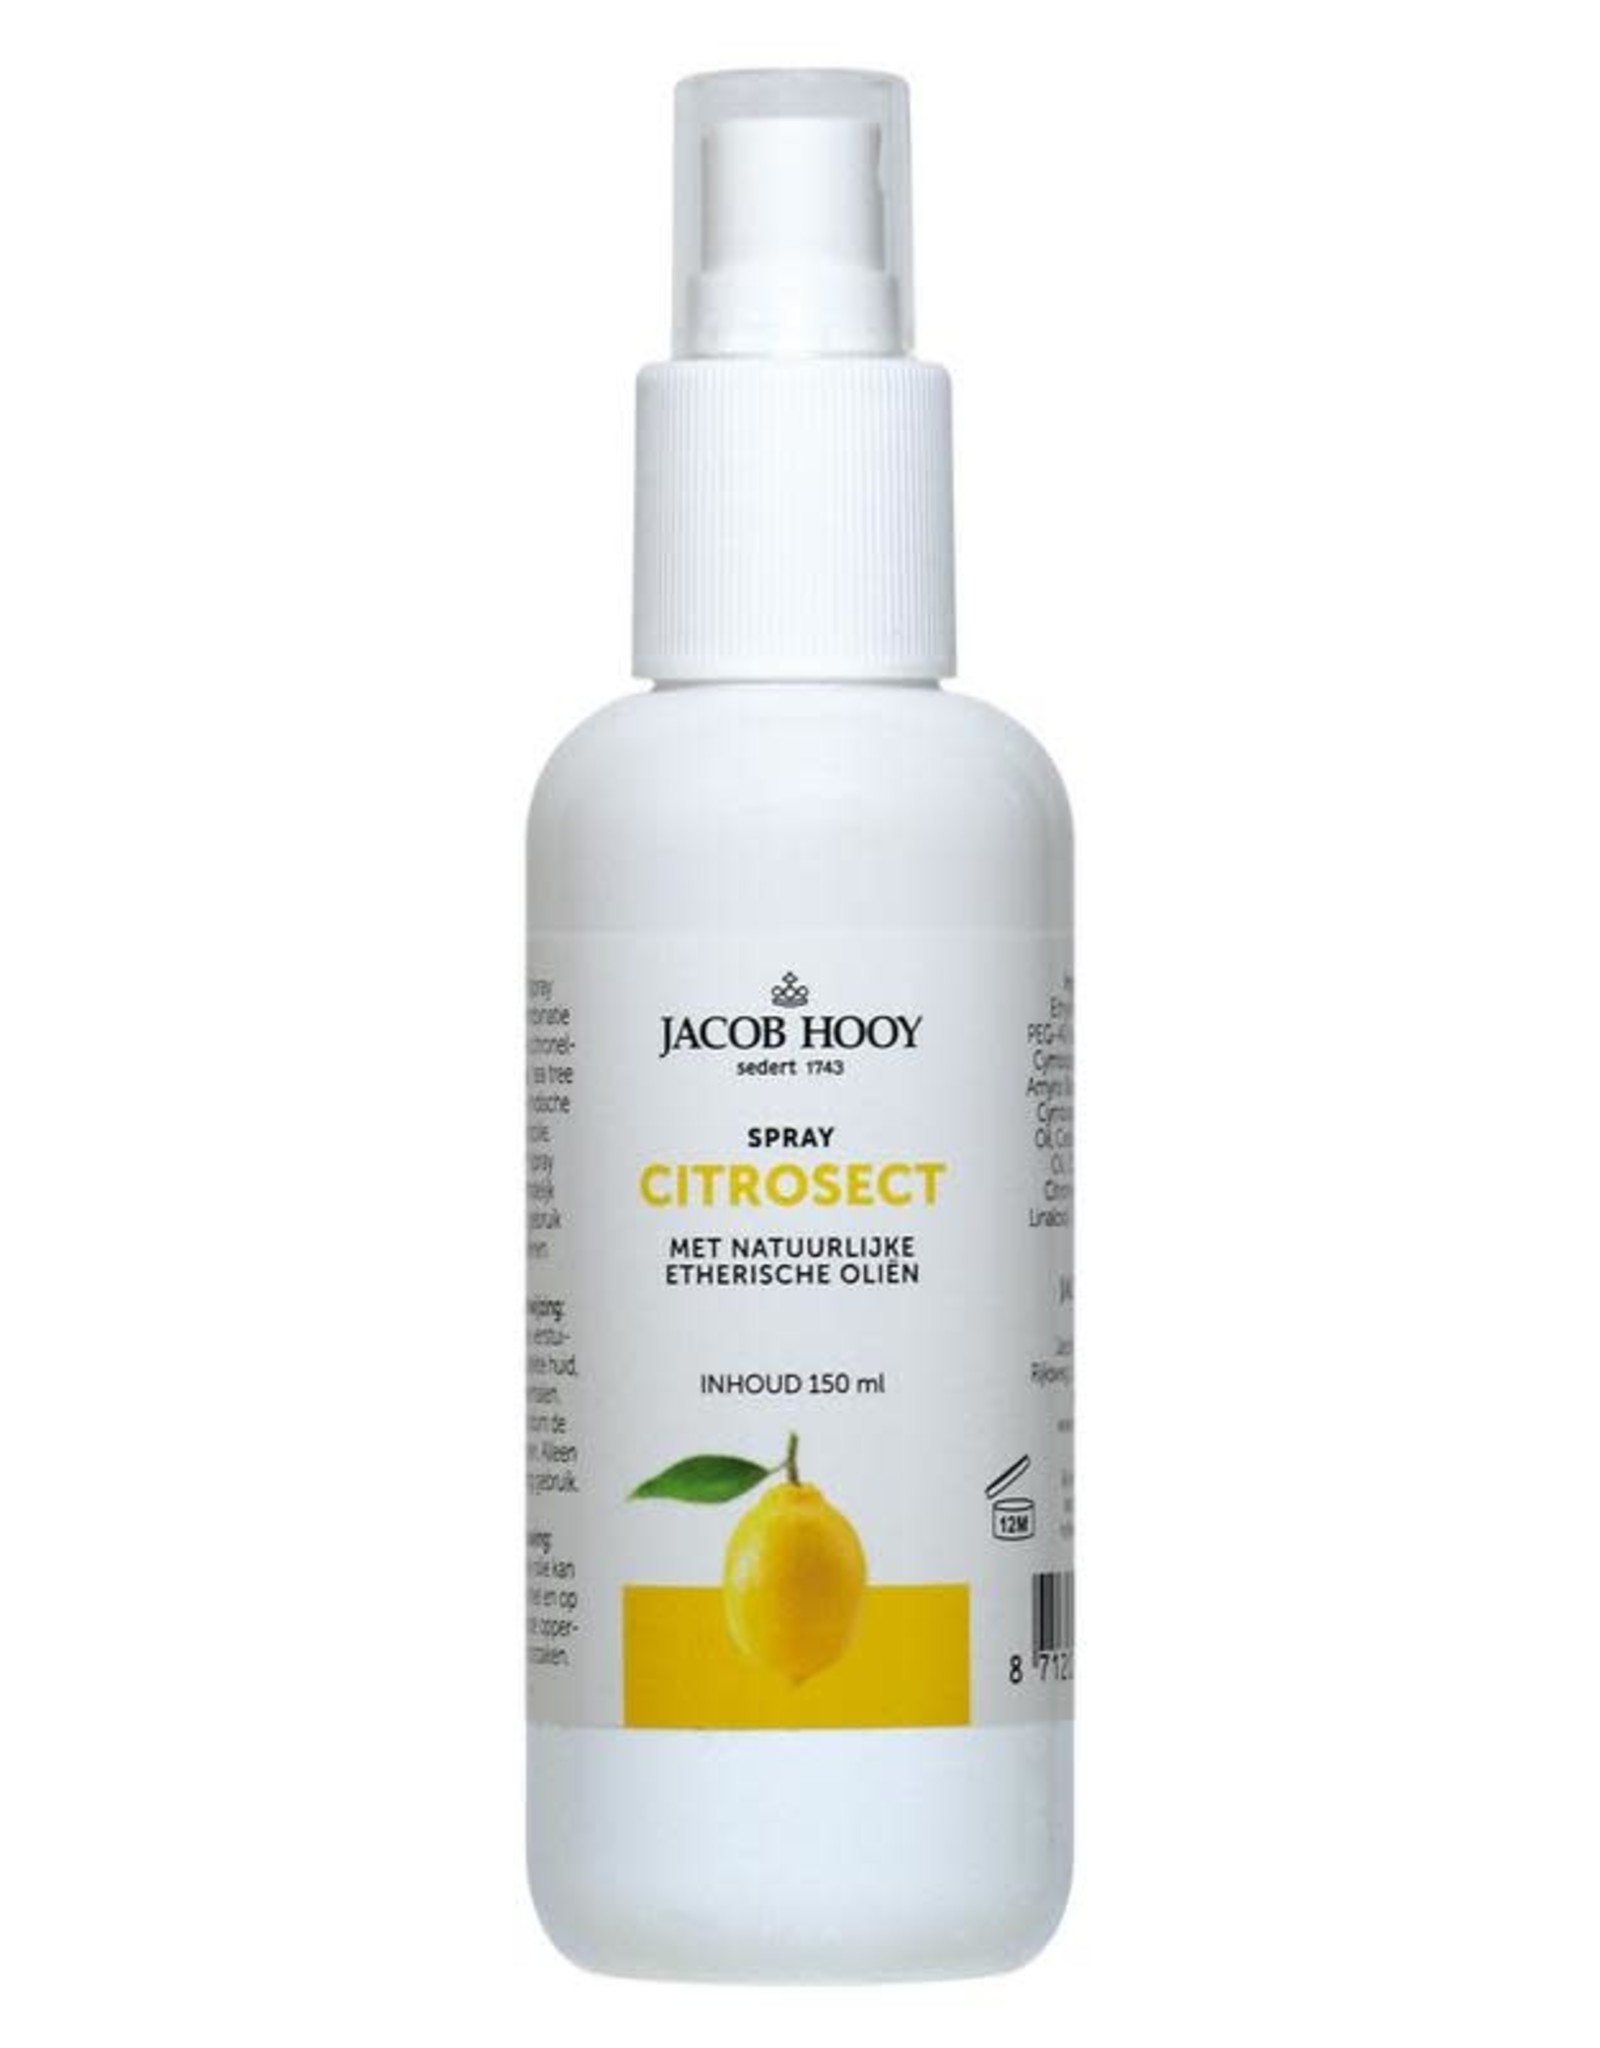 Jacob Hooy Citrosect spray (citronella) 150ml